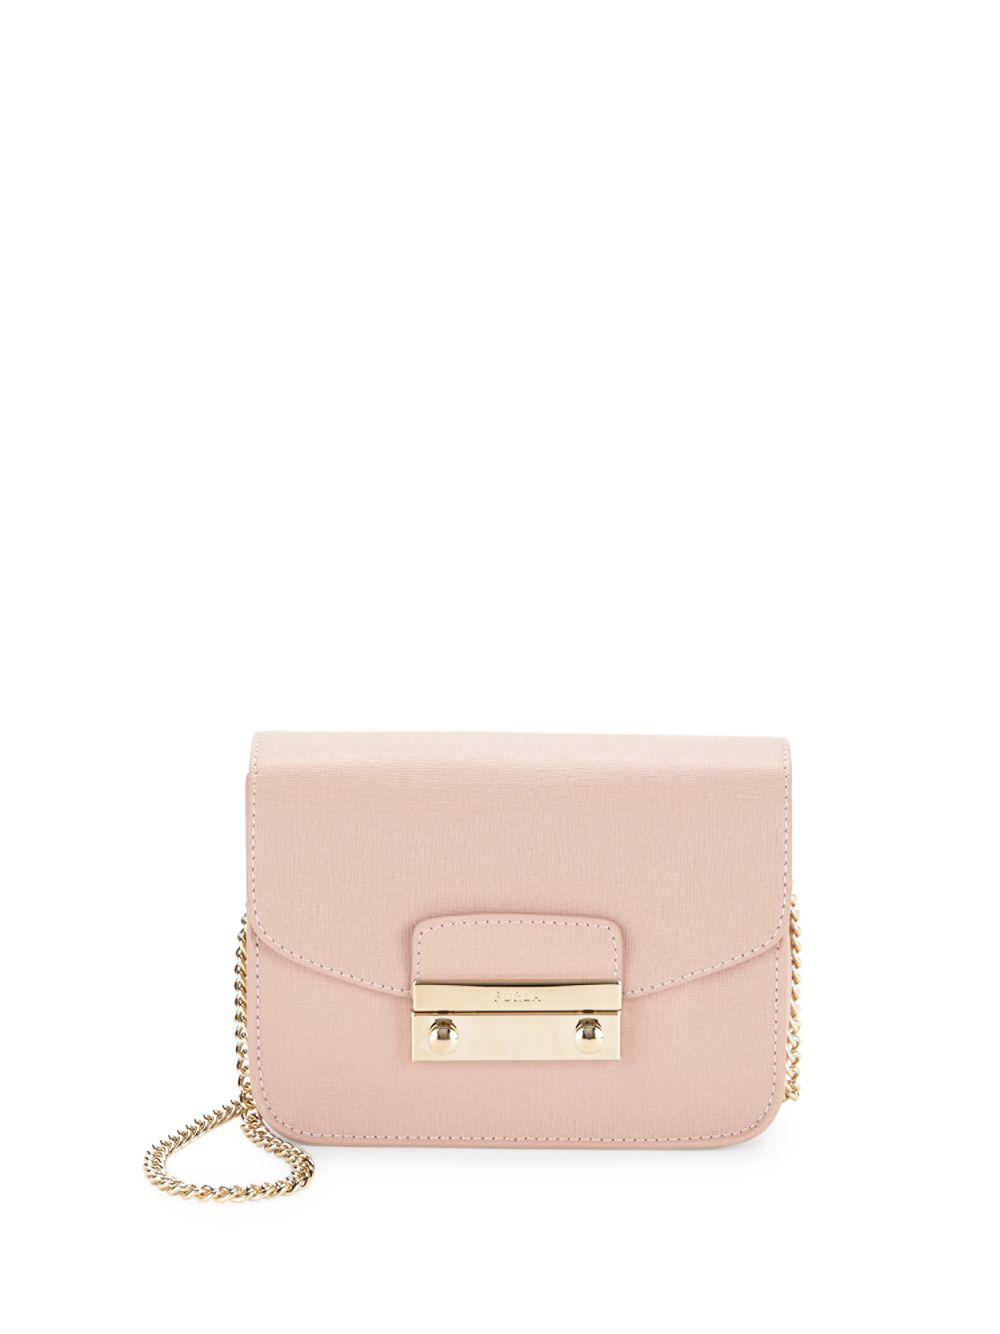 Furla Julia Leather Crossbody Bag in Pink - Lyst